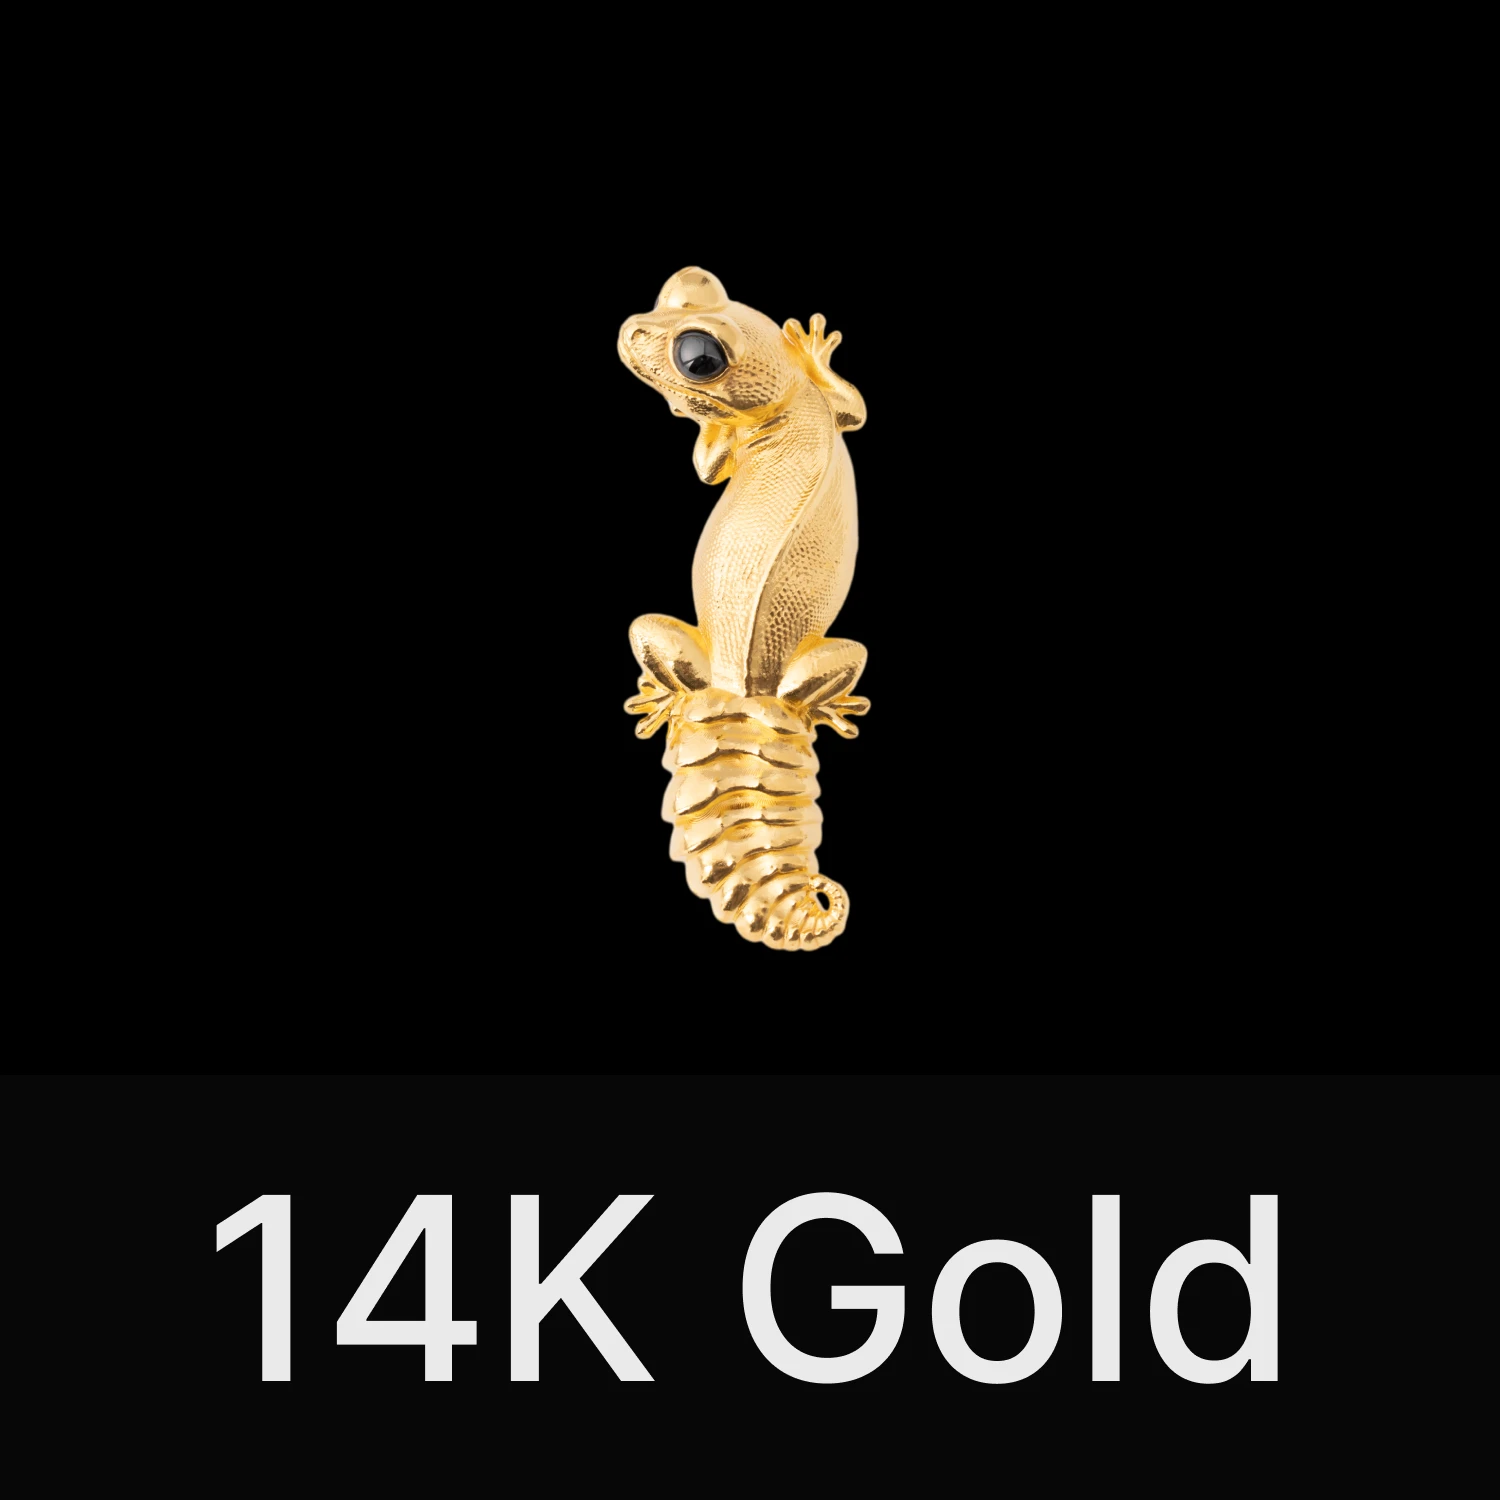 Knob Tail Gecko Brooch 14K Gold & Black Agate